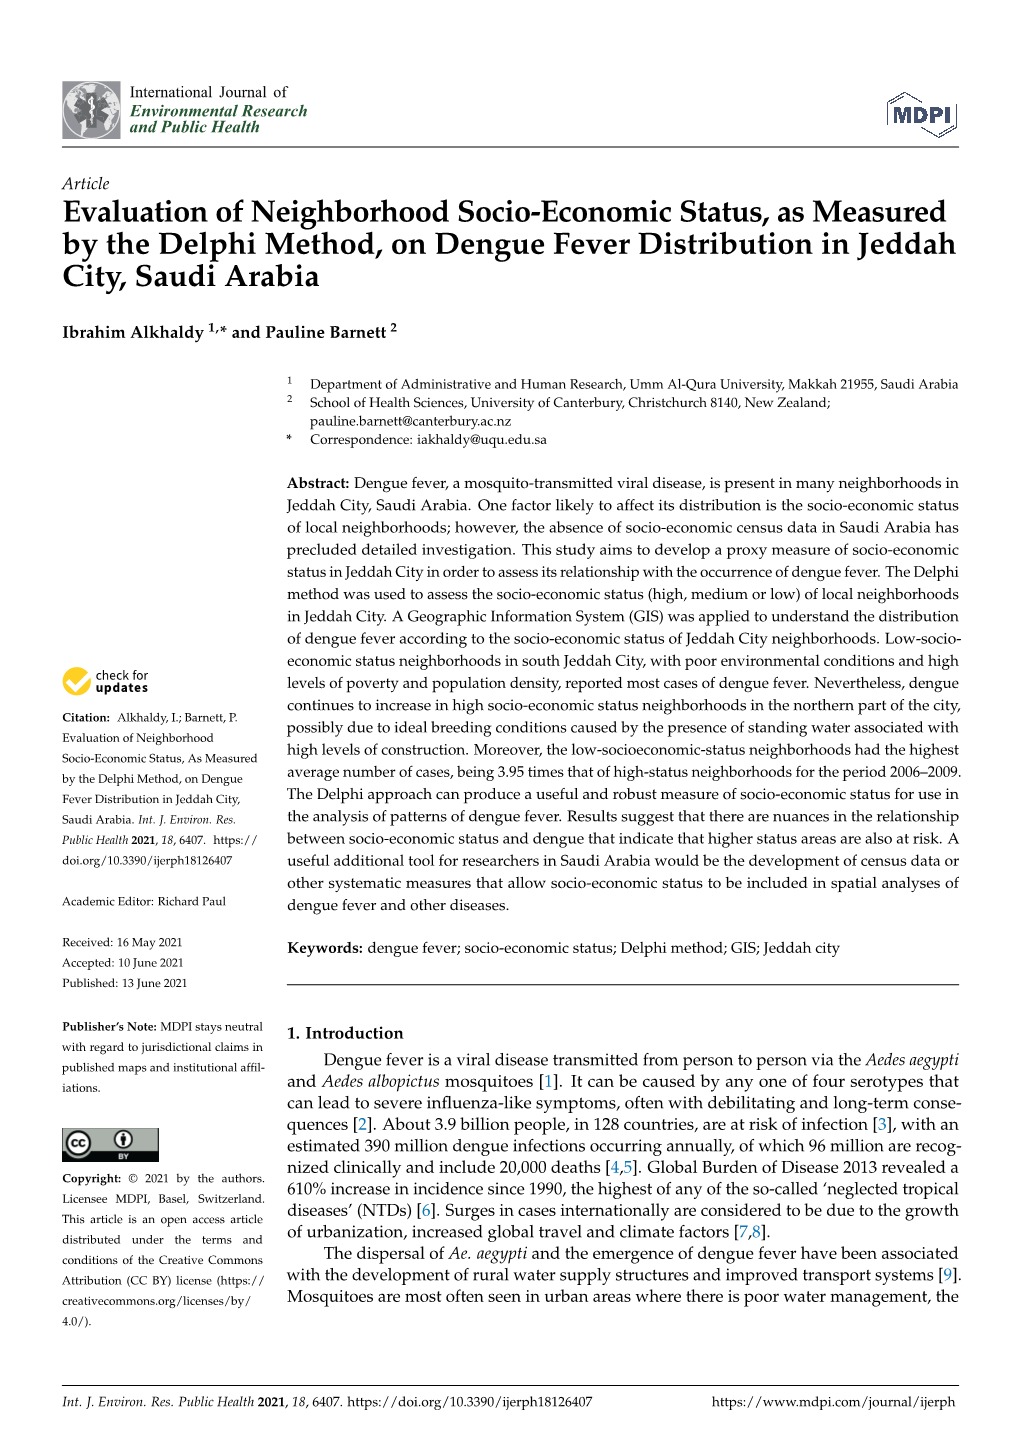 Evaluation of Neighborhood Socio-Economic Status, As Measured by the Delphi Method, on Dengue Fever Distribution in Jeddah City, Saudi Arabia